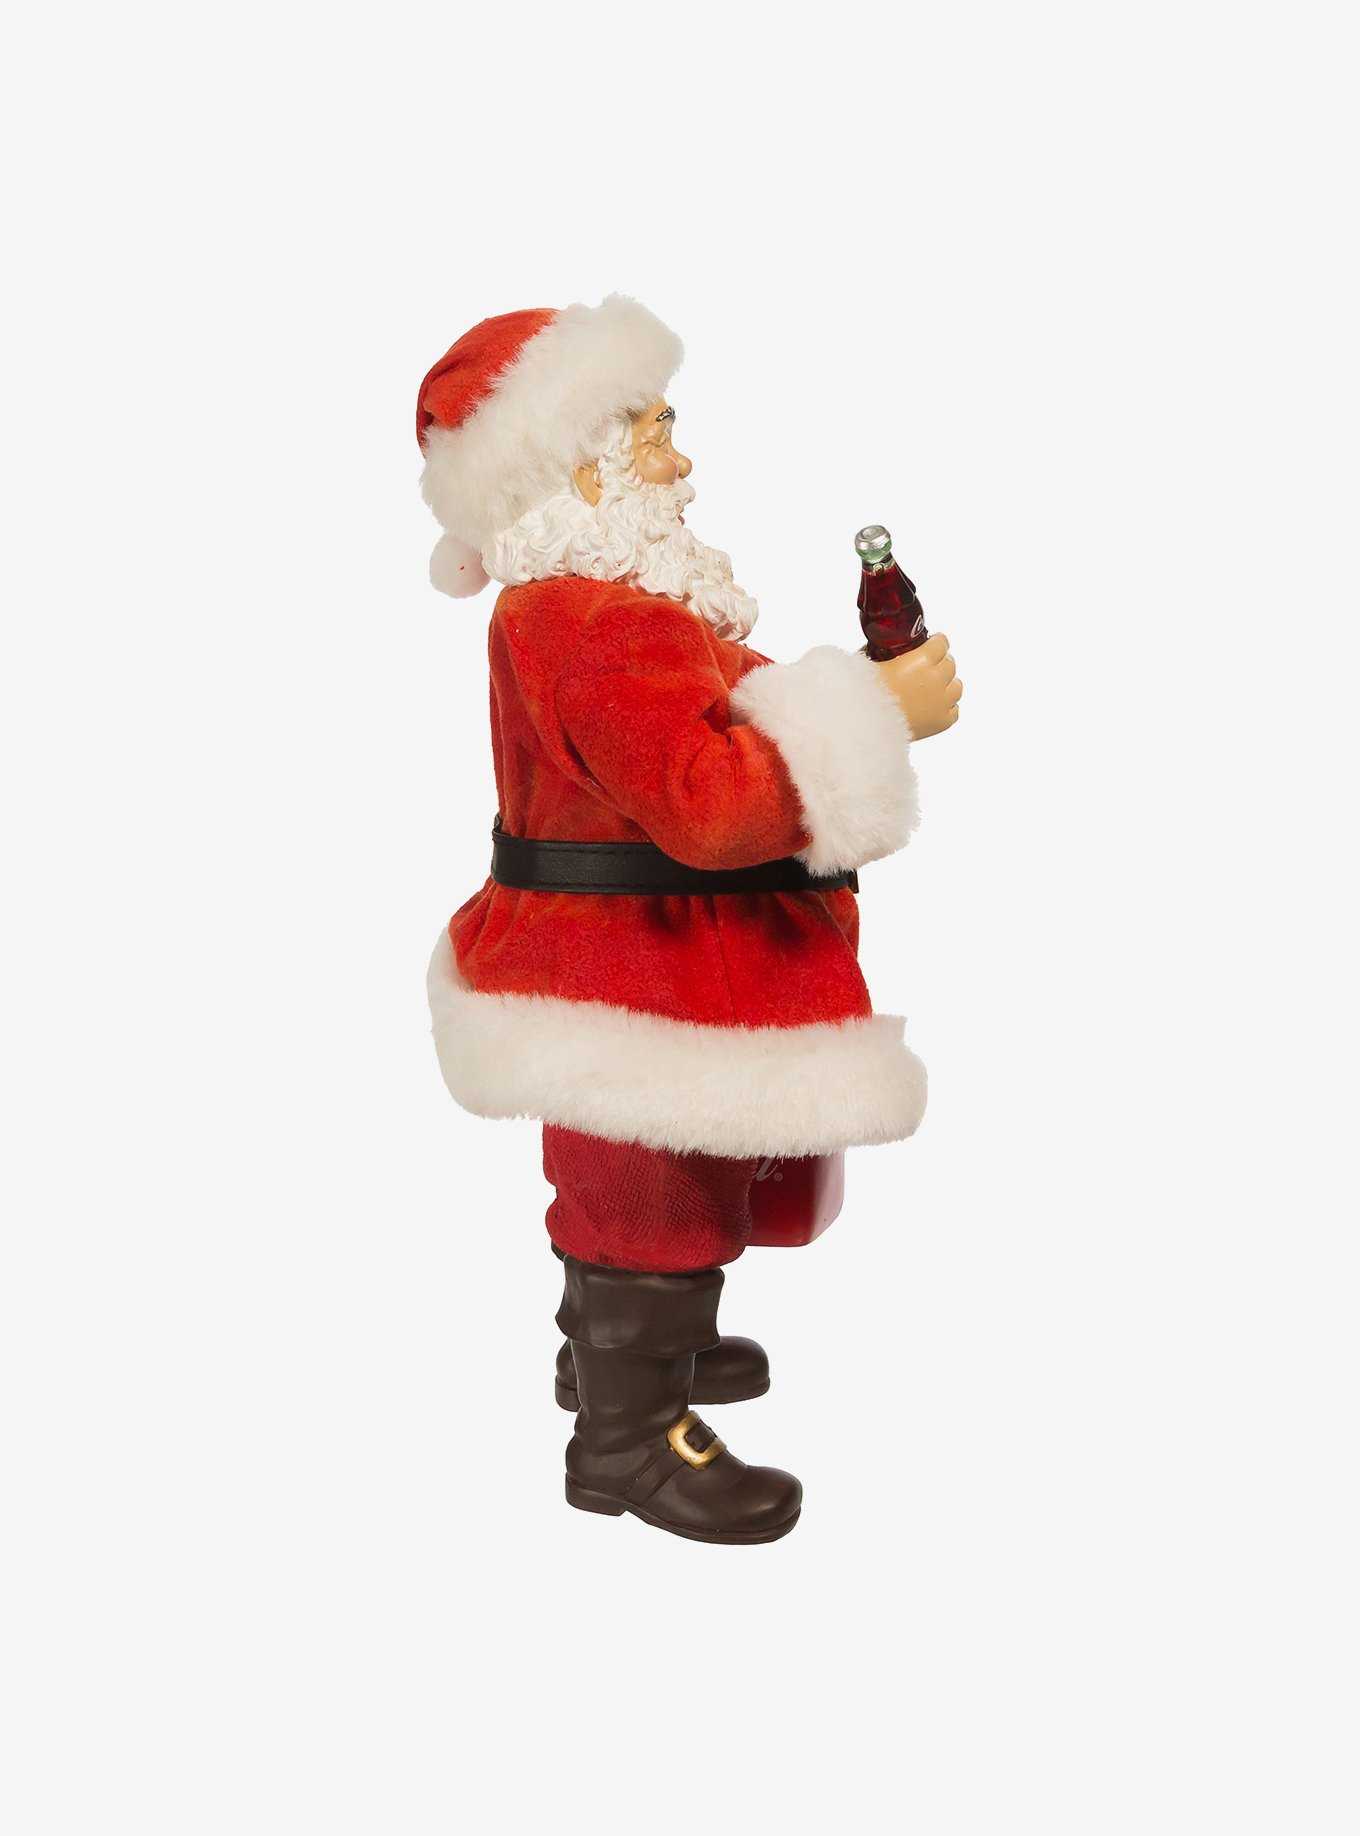 Kurt Adler Coke Santa with Cooler Figure, , hi-res